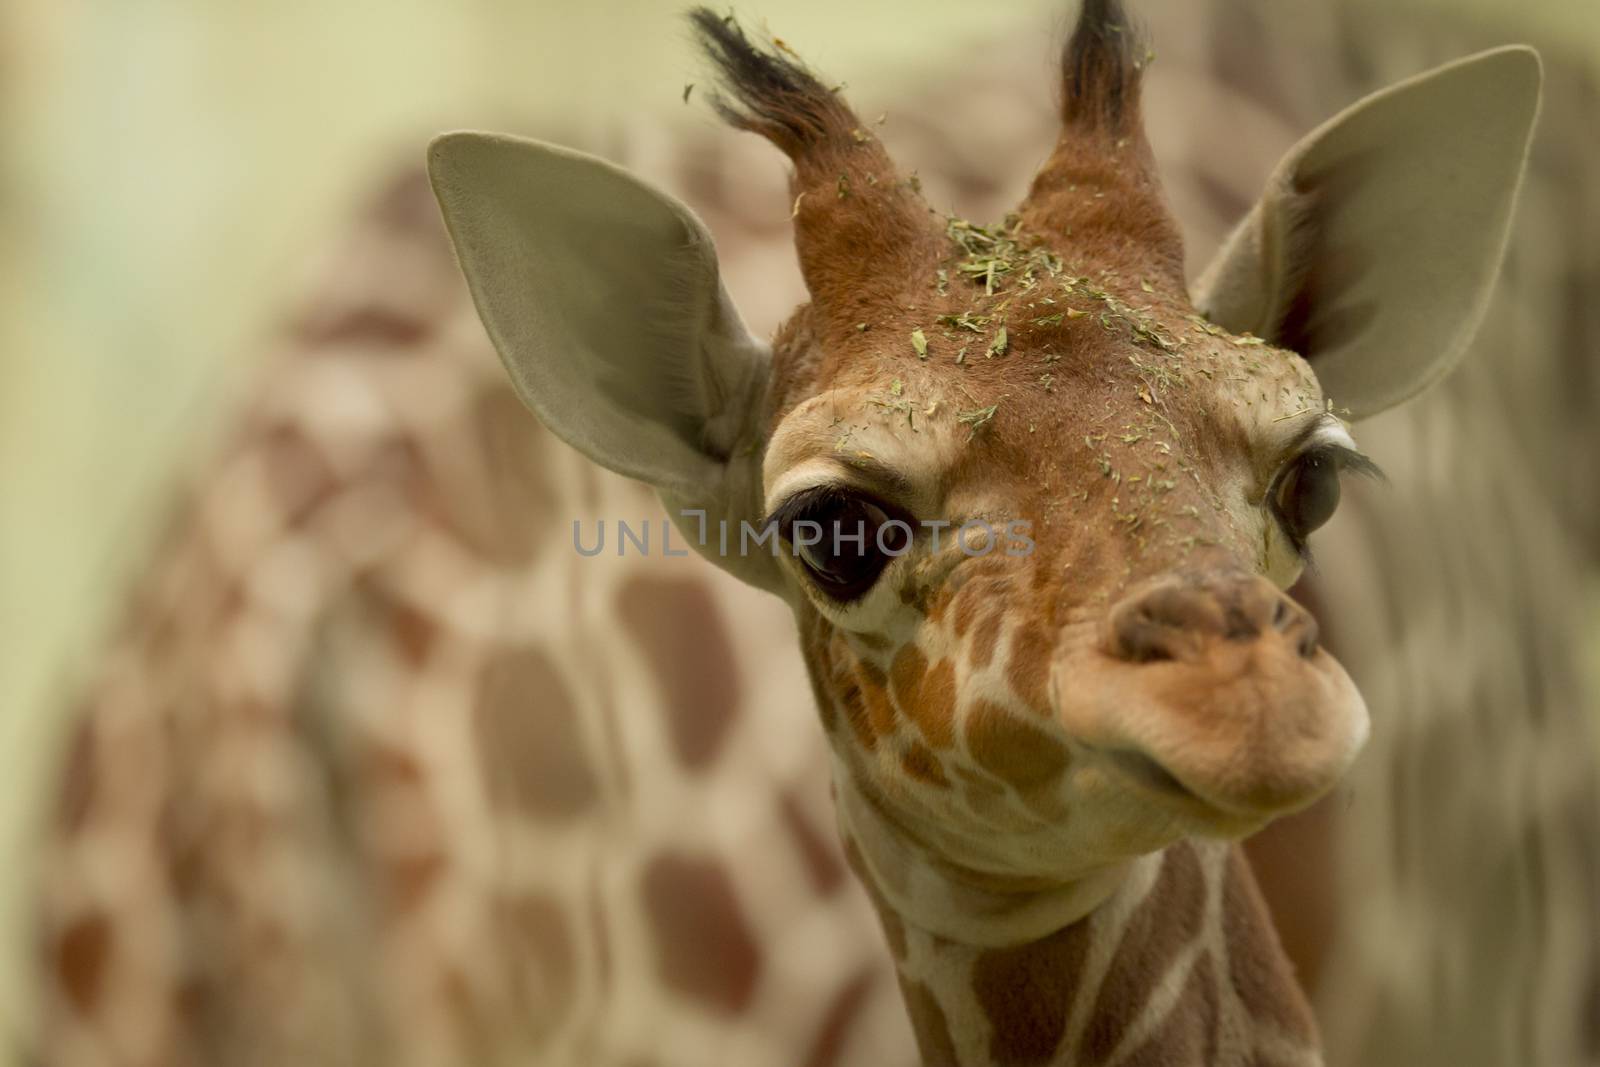 Giraffe calf, baby giraffe portrait in the wilderness